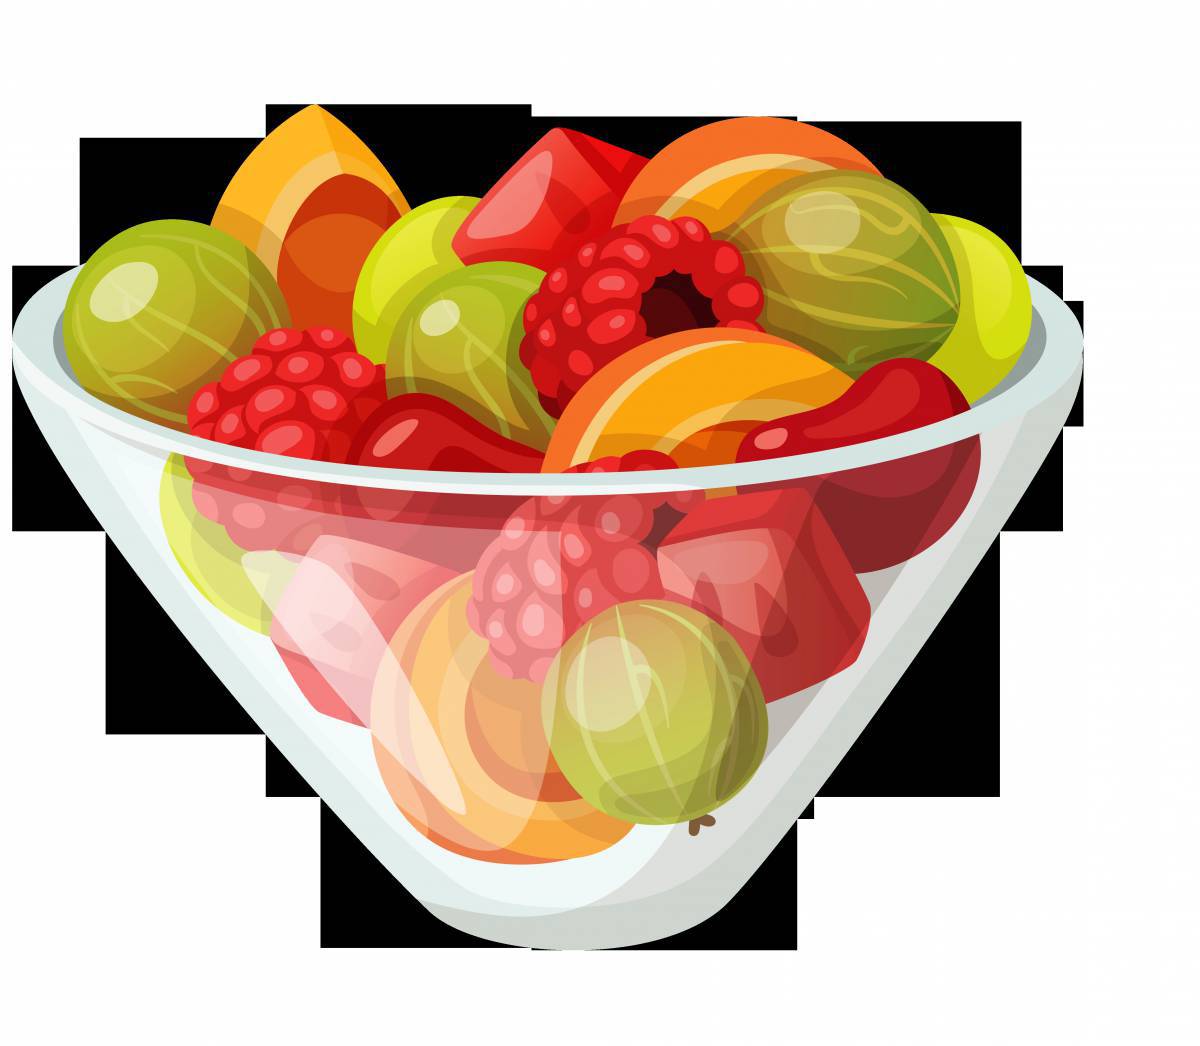 Тарелка с фруктами #5